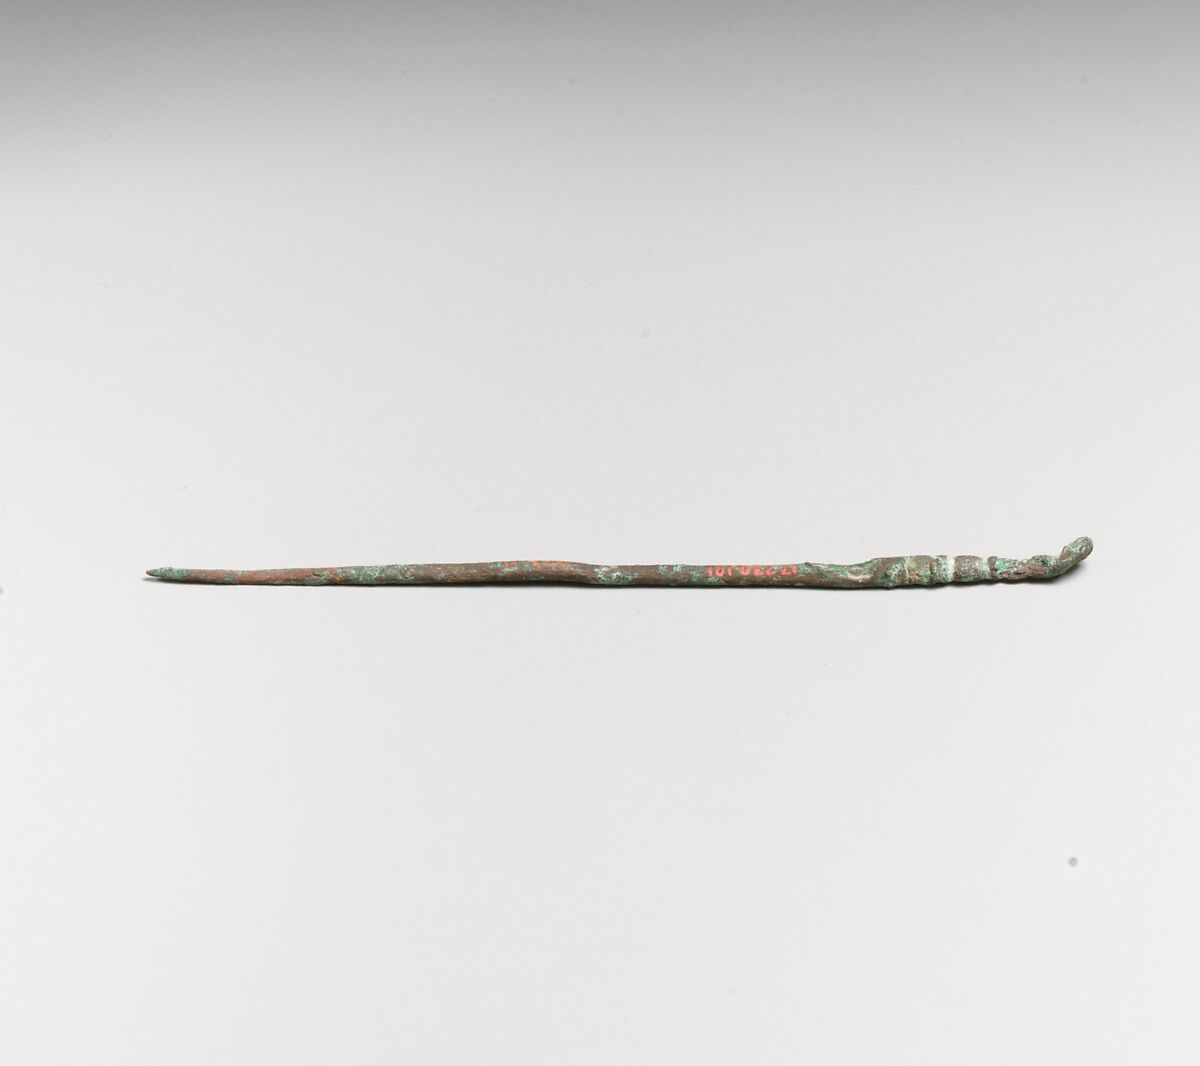 Spoon or ligula, Bronze, Roman 